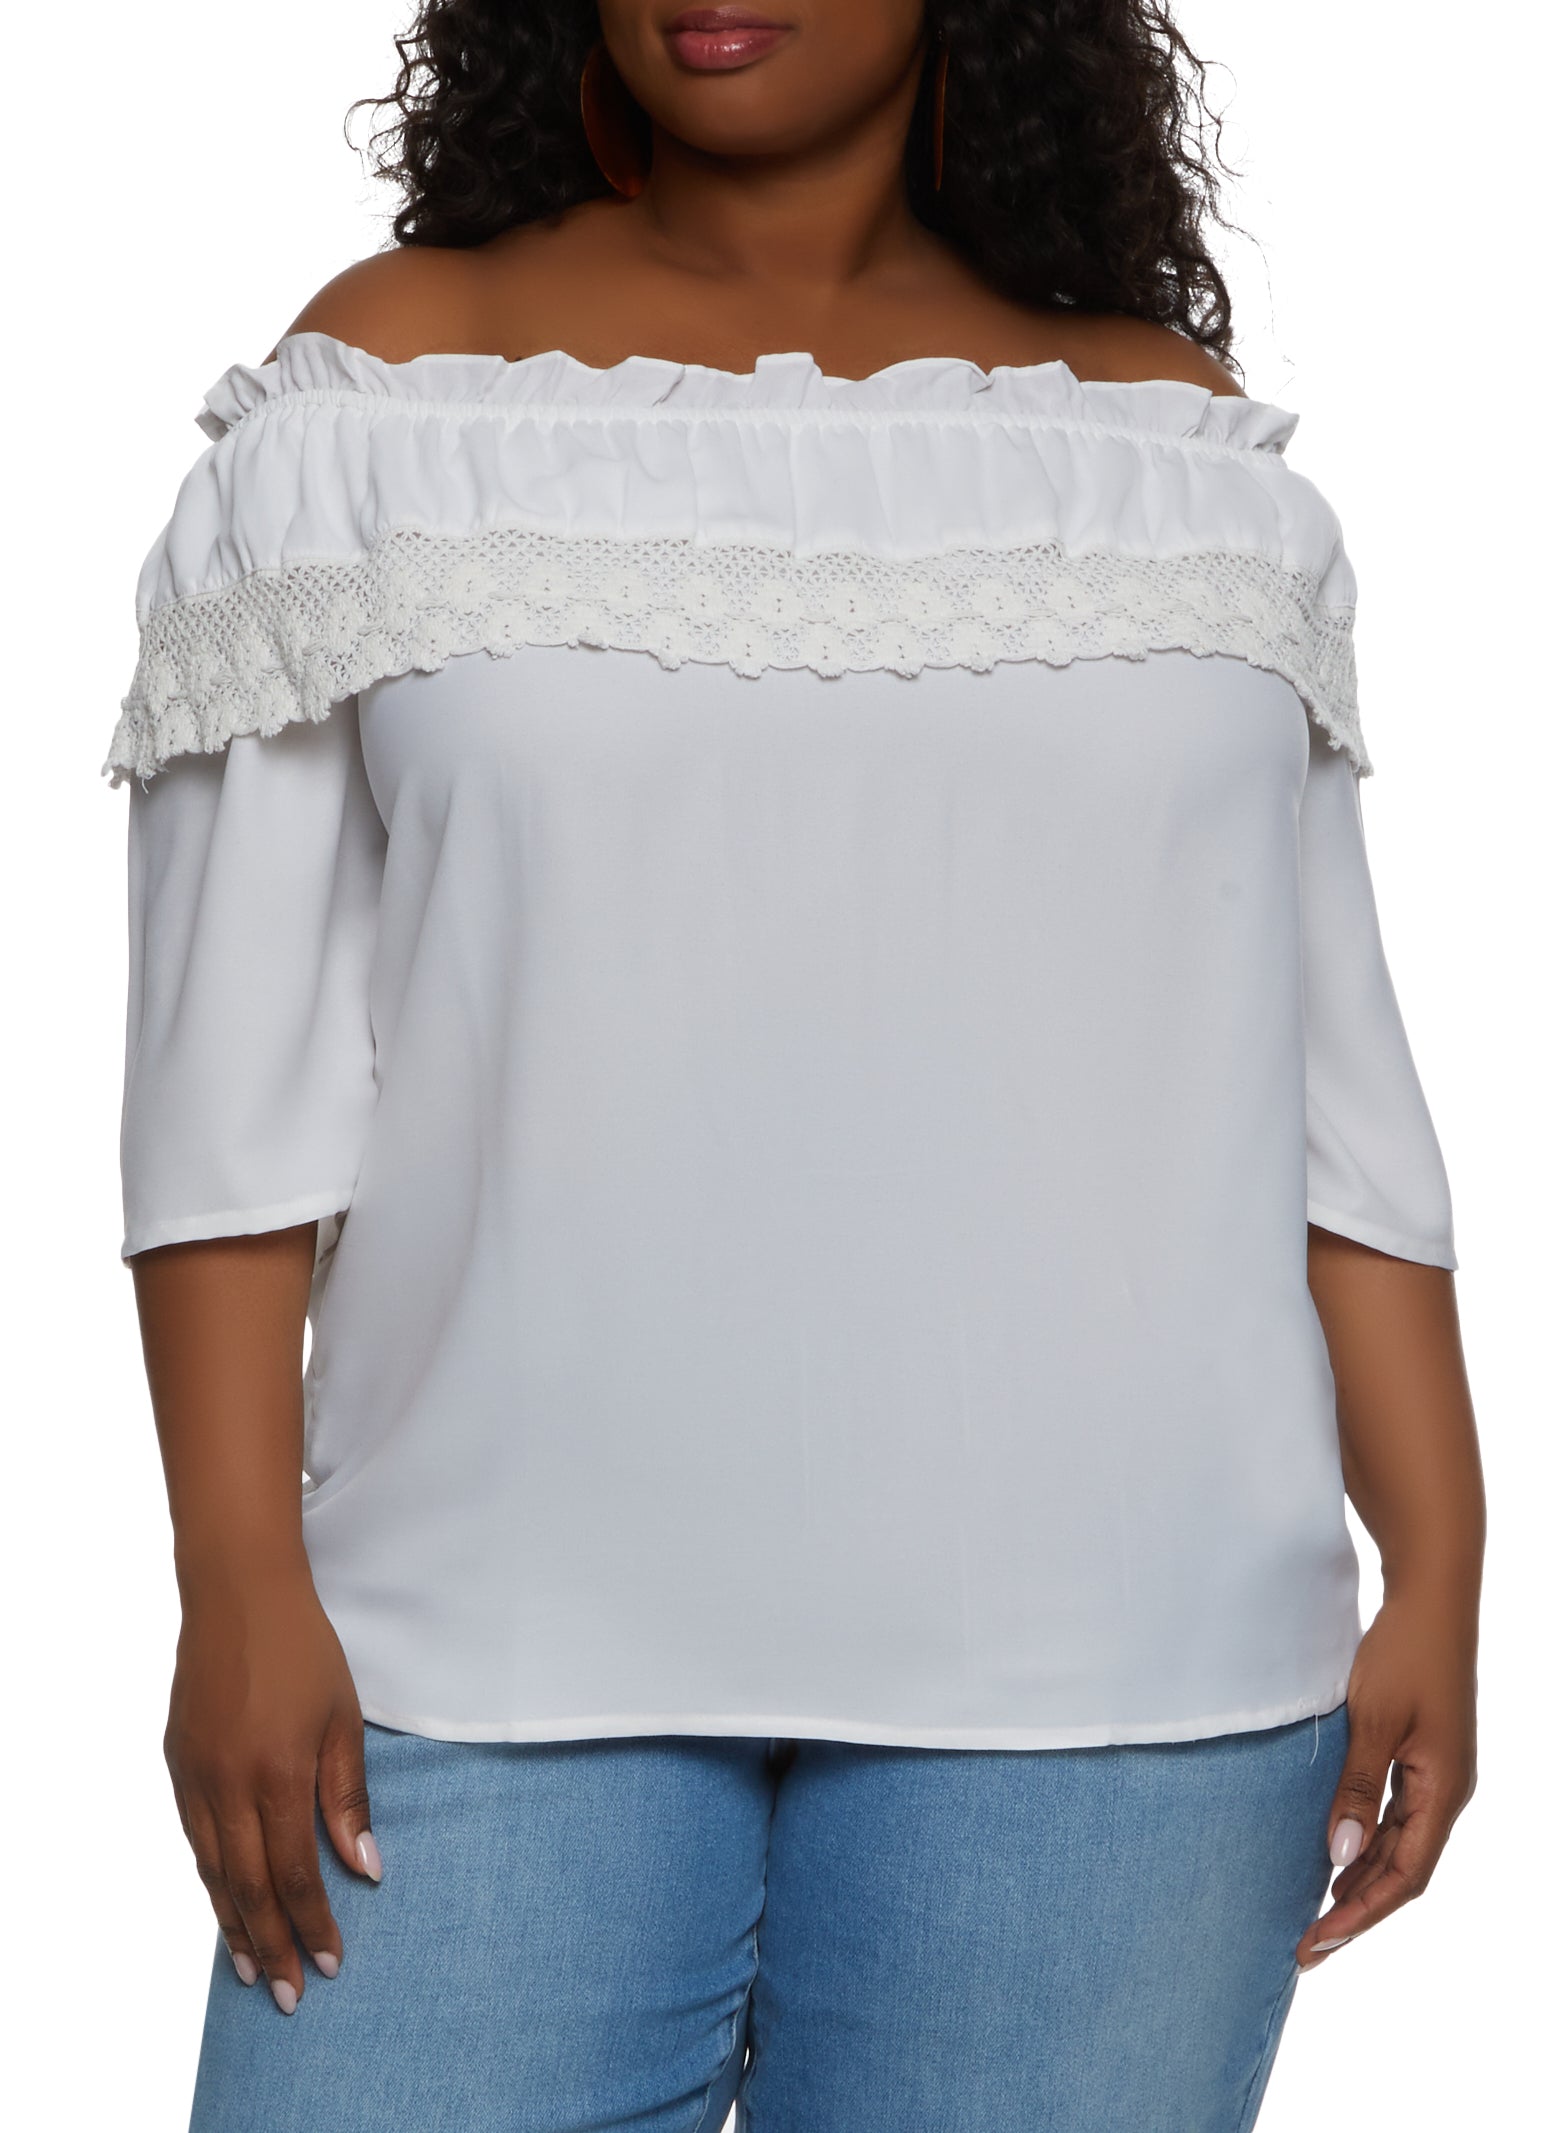 Womens Plus Size Crochet Detail Off the Shoulder Top, White, Size 2X